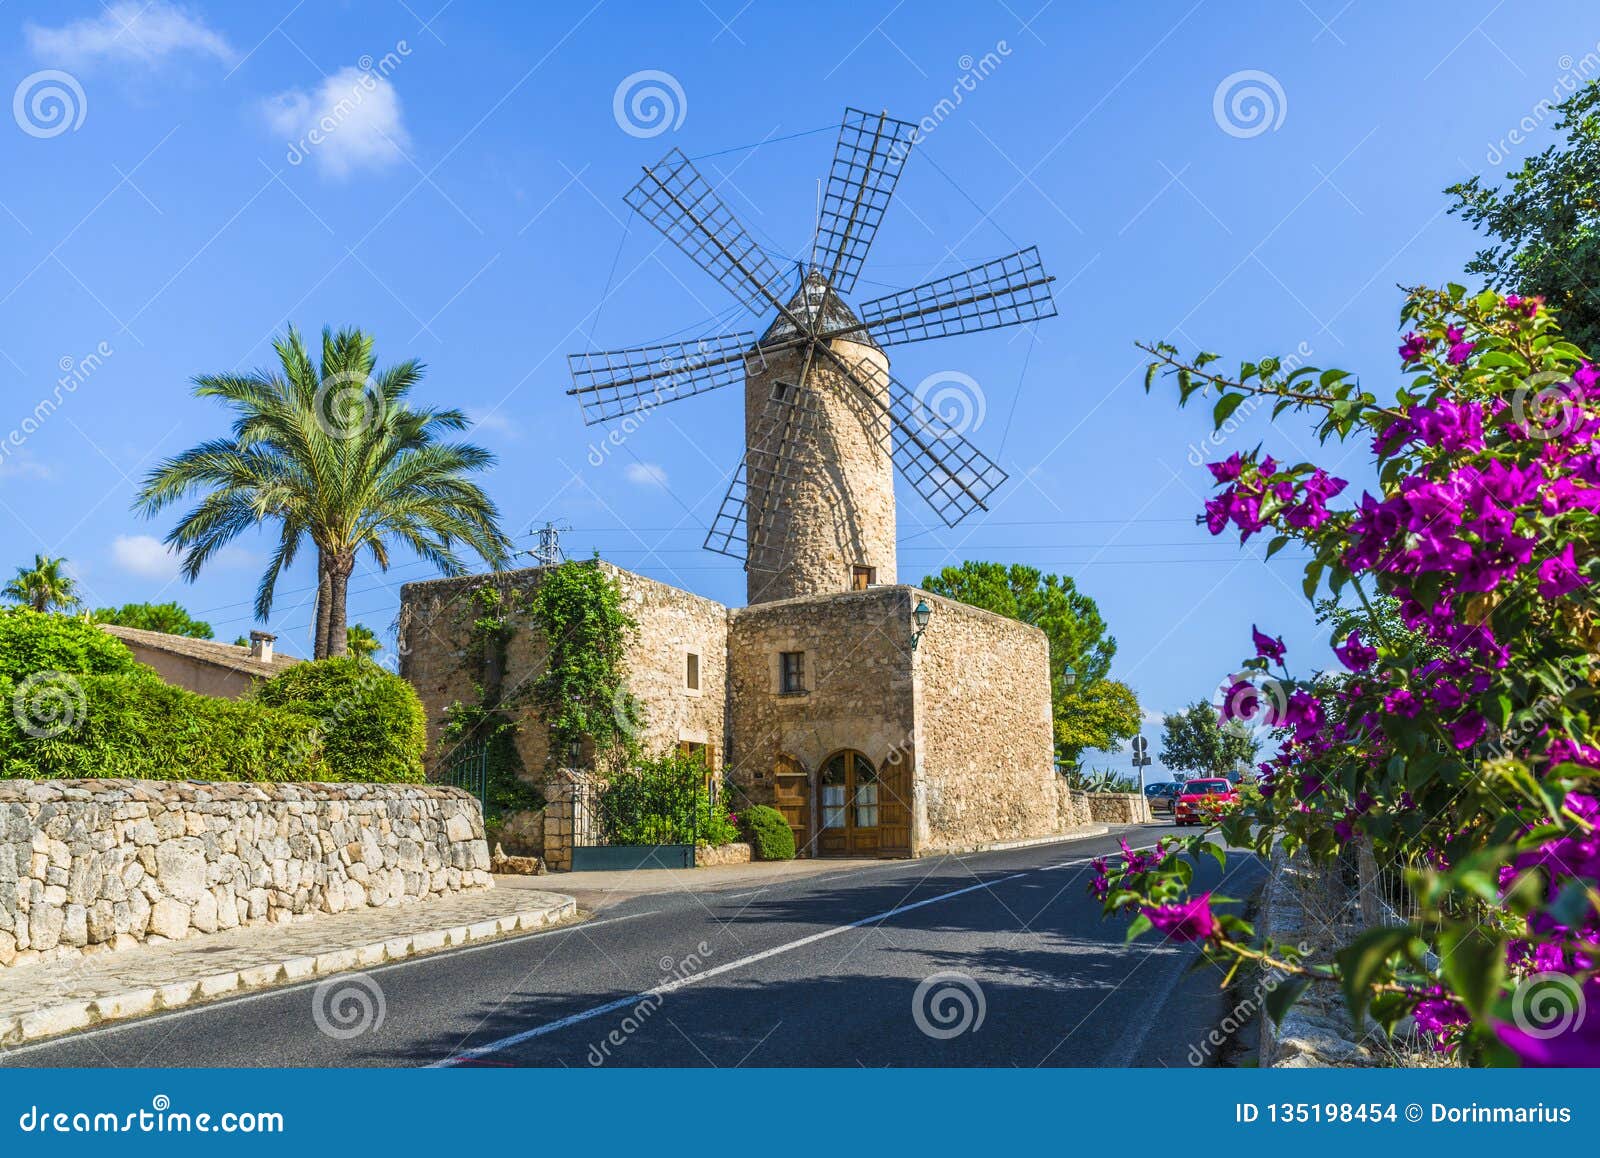 medieval windmill in palma mallorca, balearic island, spain